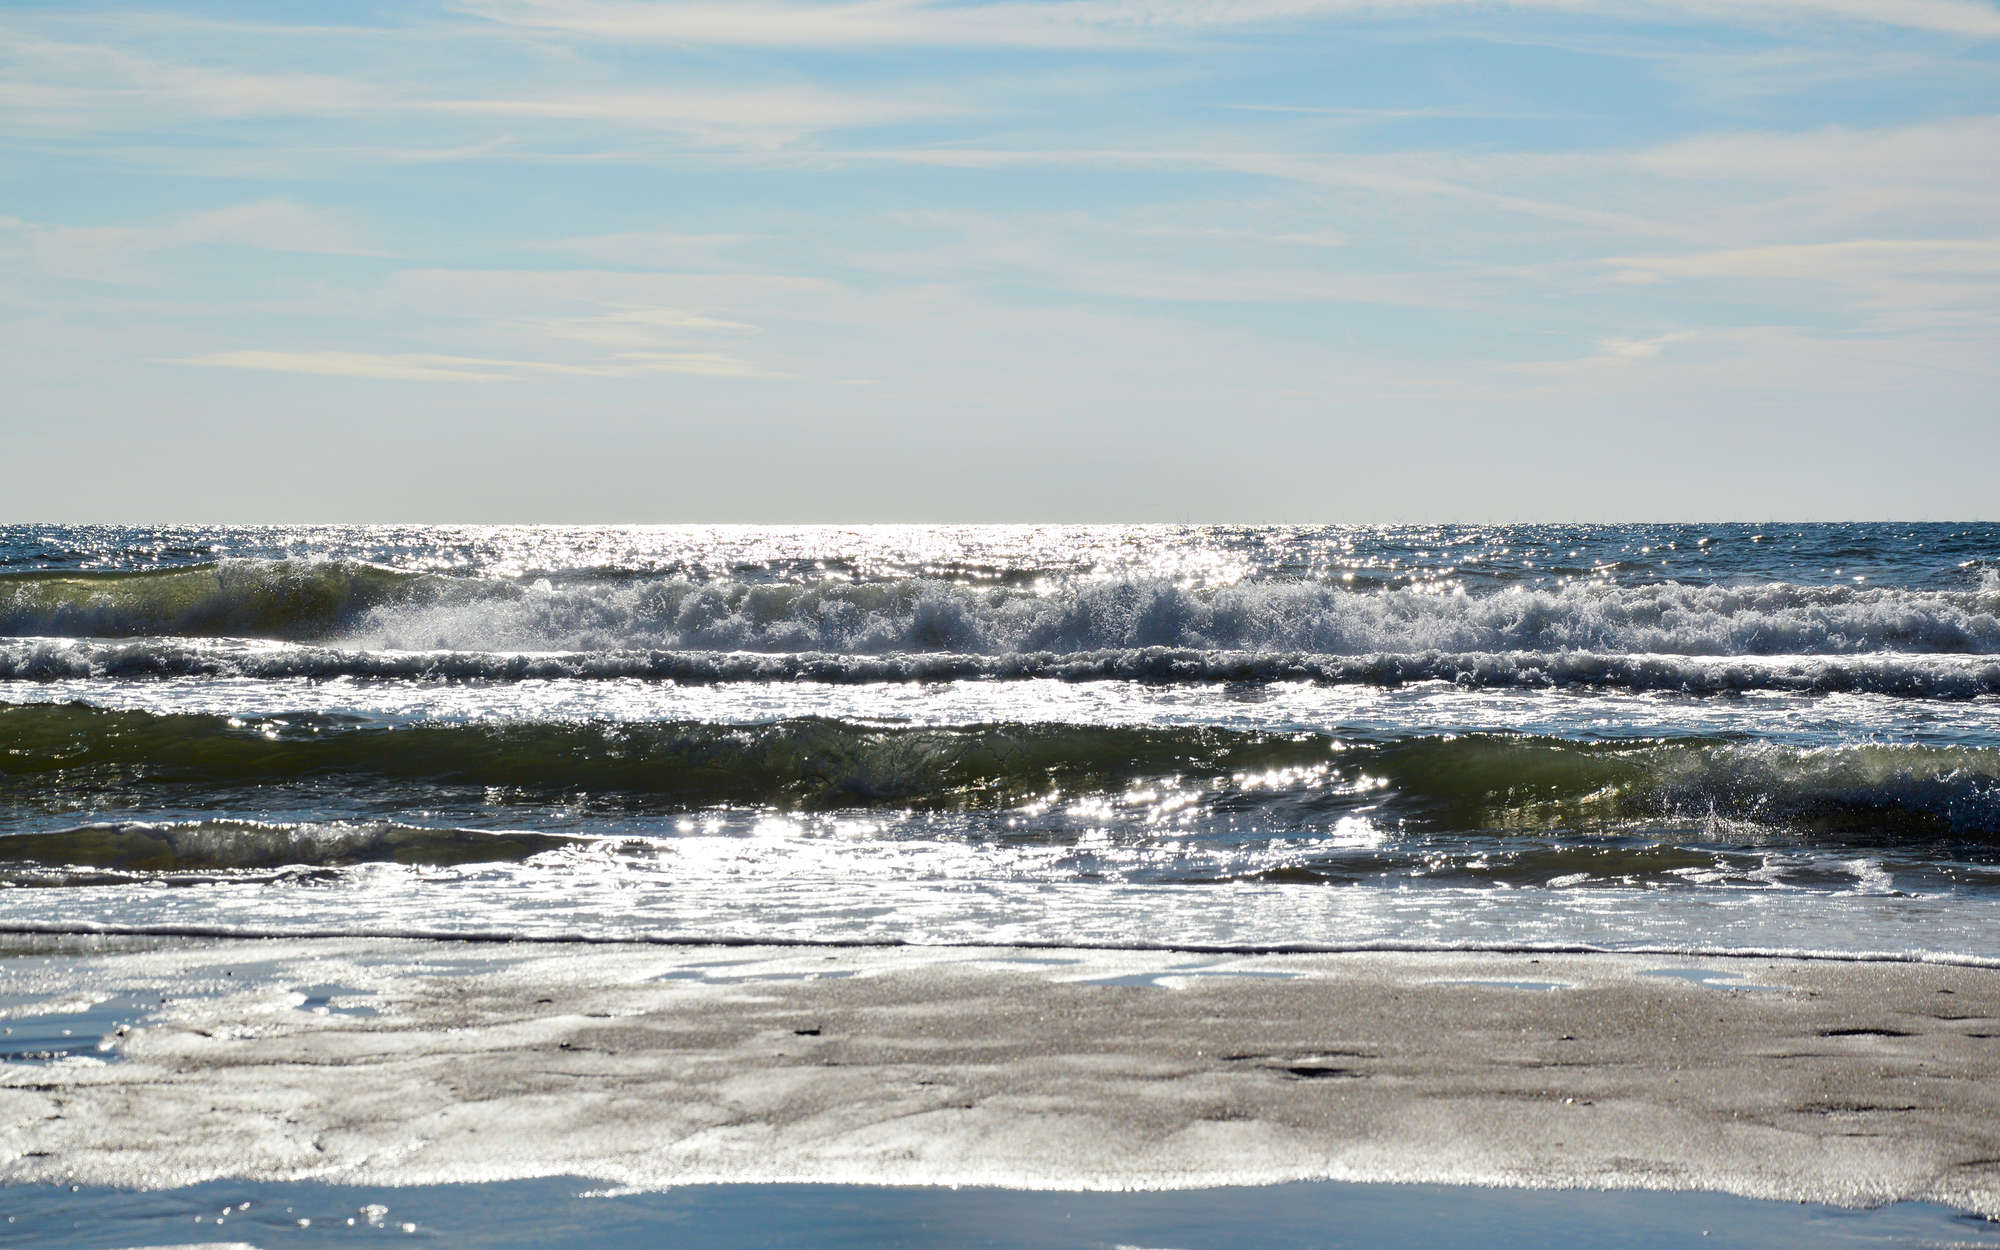             Fototapete Nordseestrand mit Wellen – Mattes Glattvlies
        